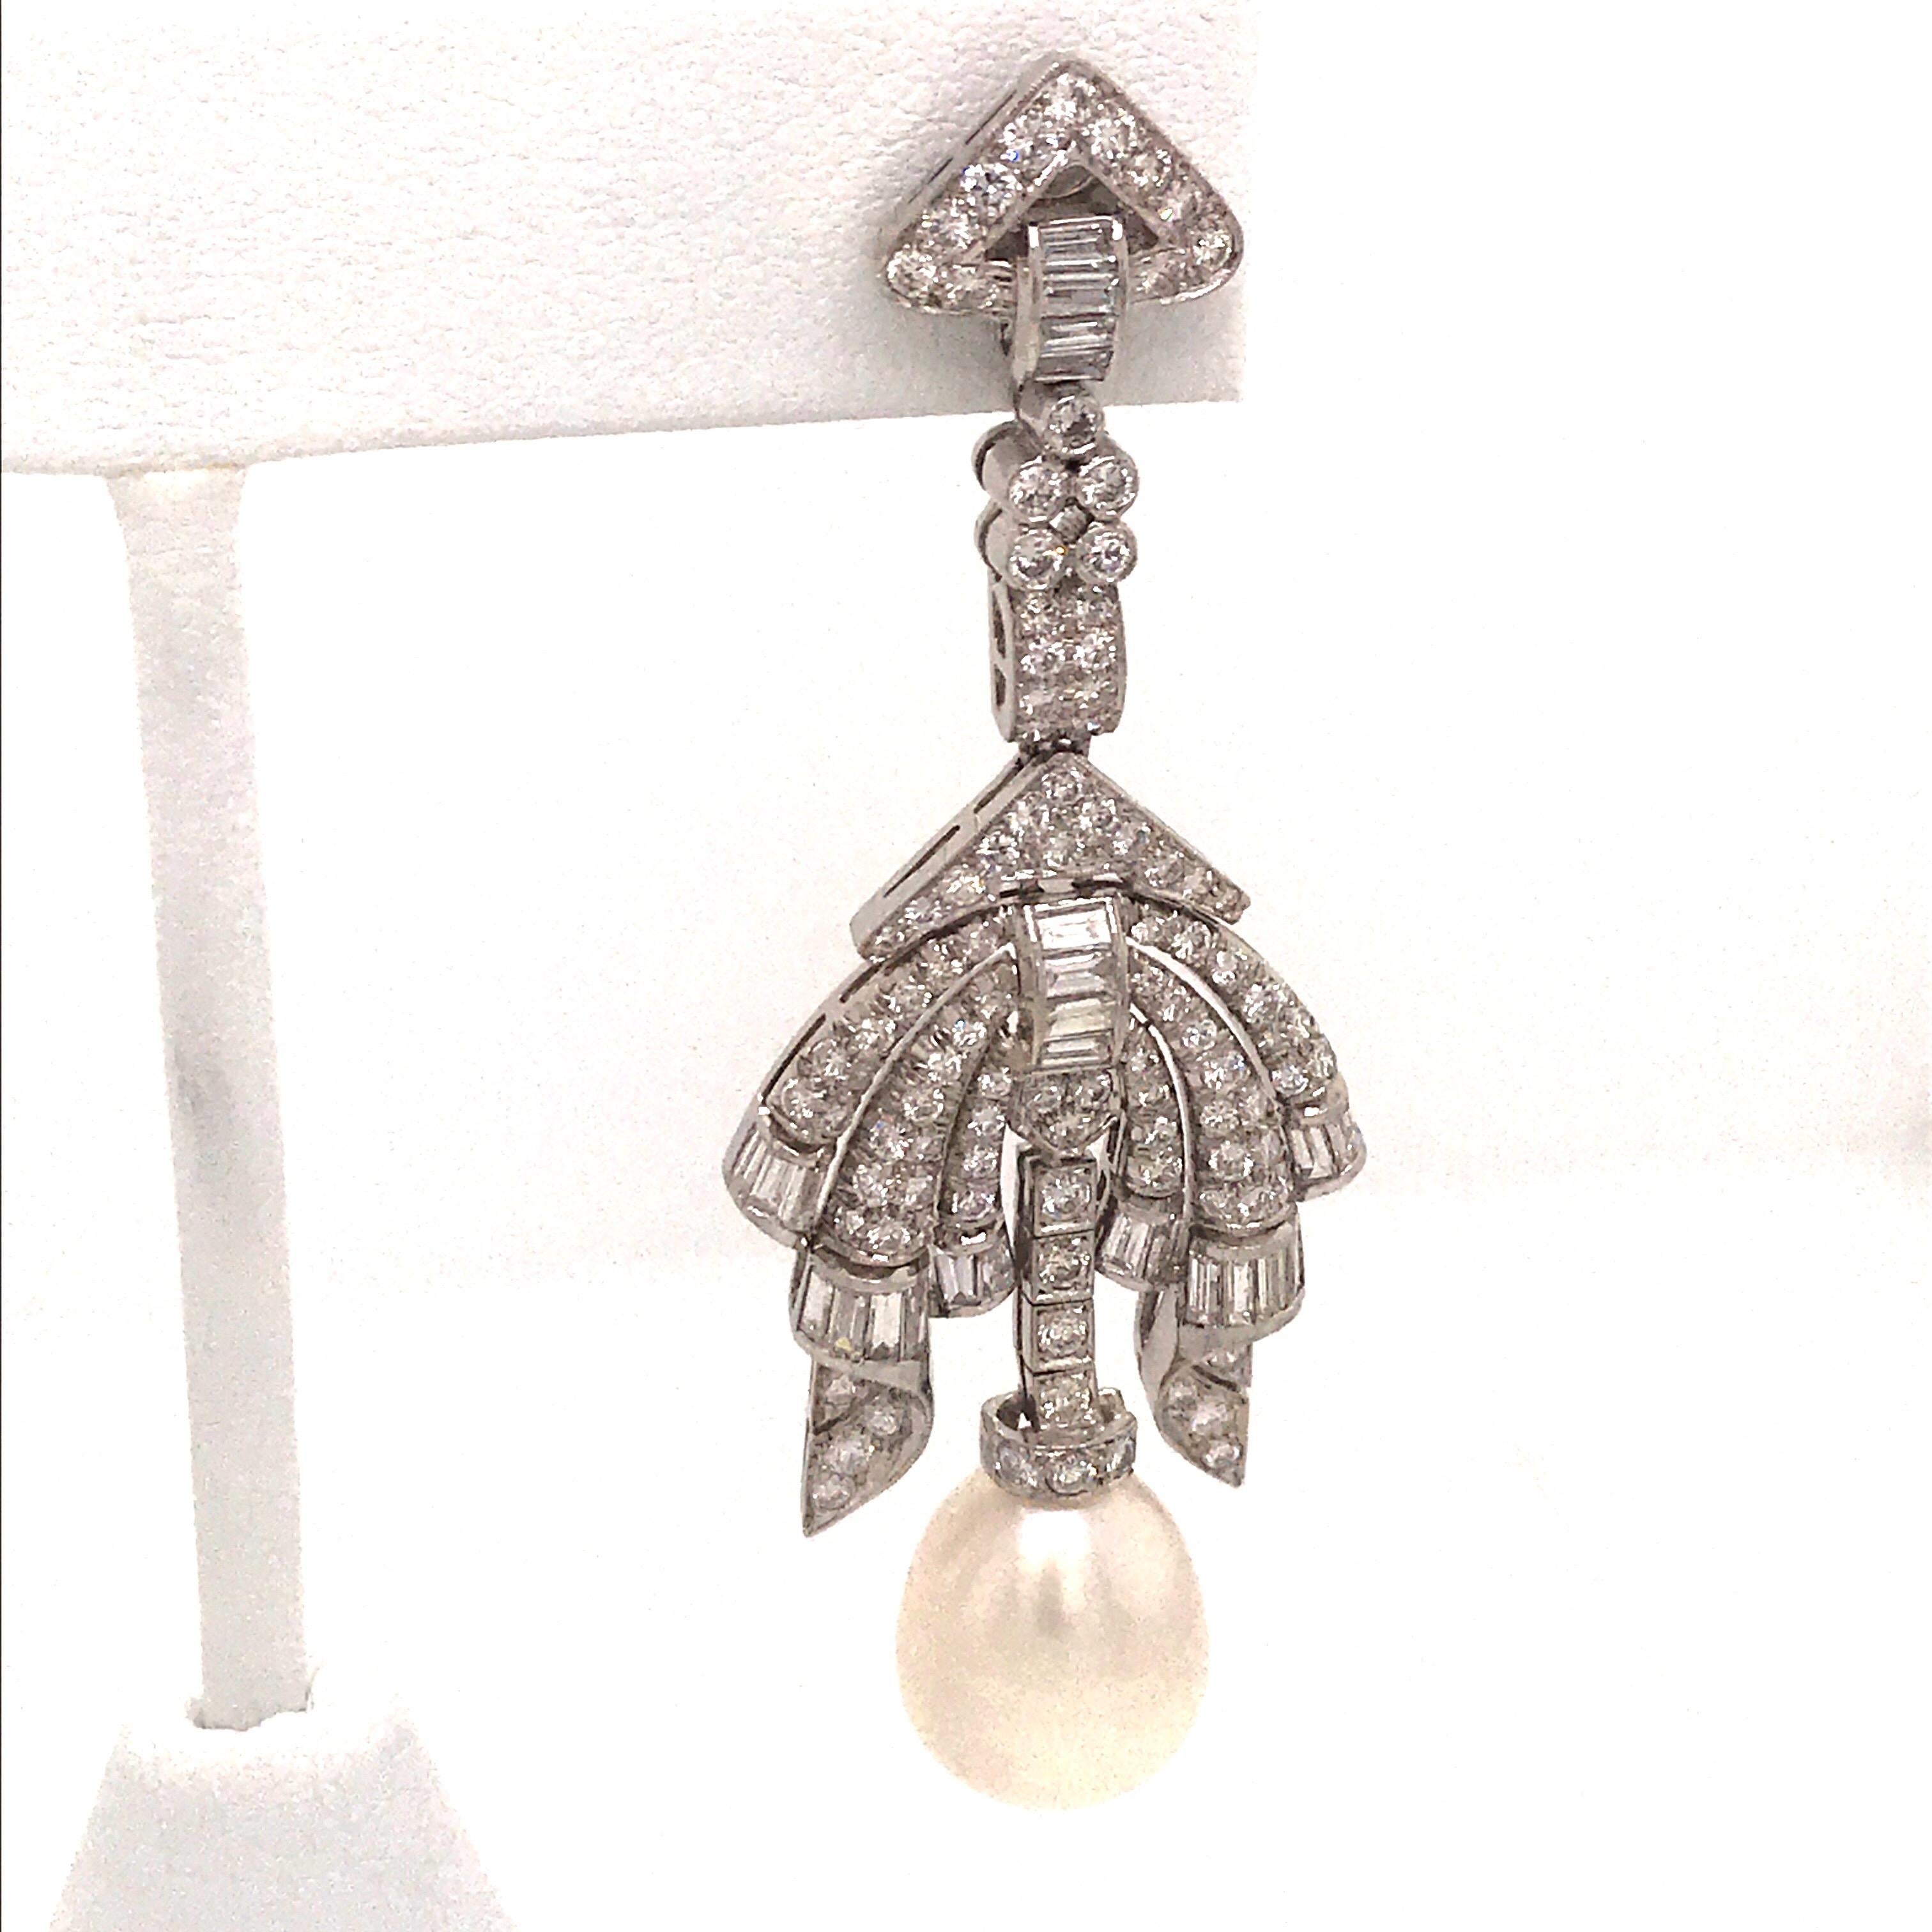 white gold pearl and diamond drop earrings -china -b2b -forum -blog -wikipedia -.cn -.gov -alibaba